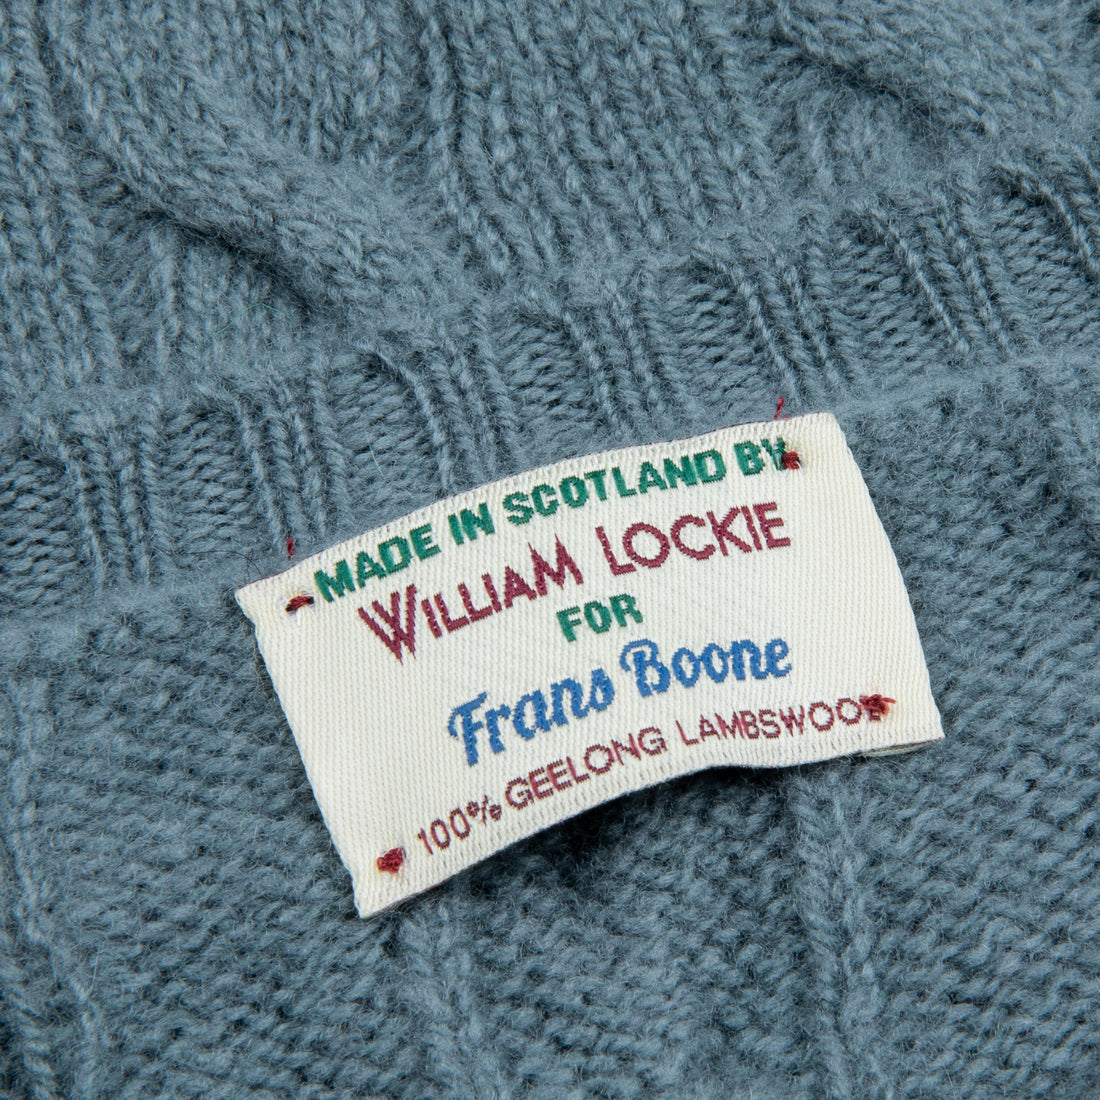 William Lockie x Frans Boone Gullan Super Geelong Cable Purslane